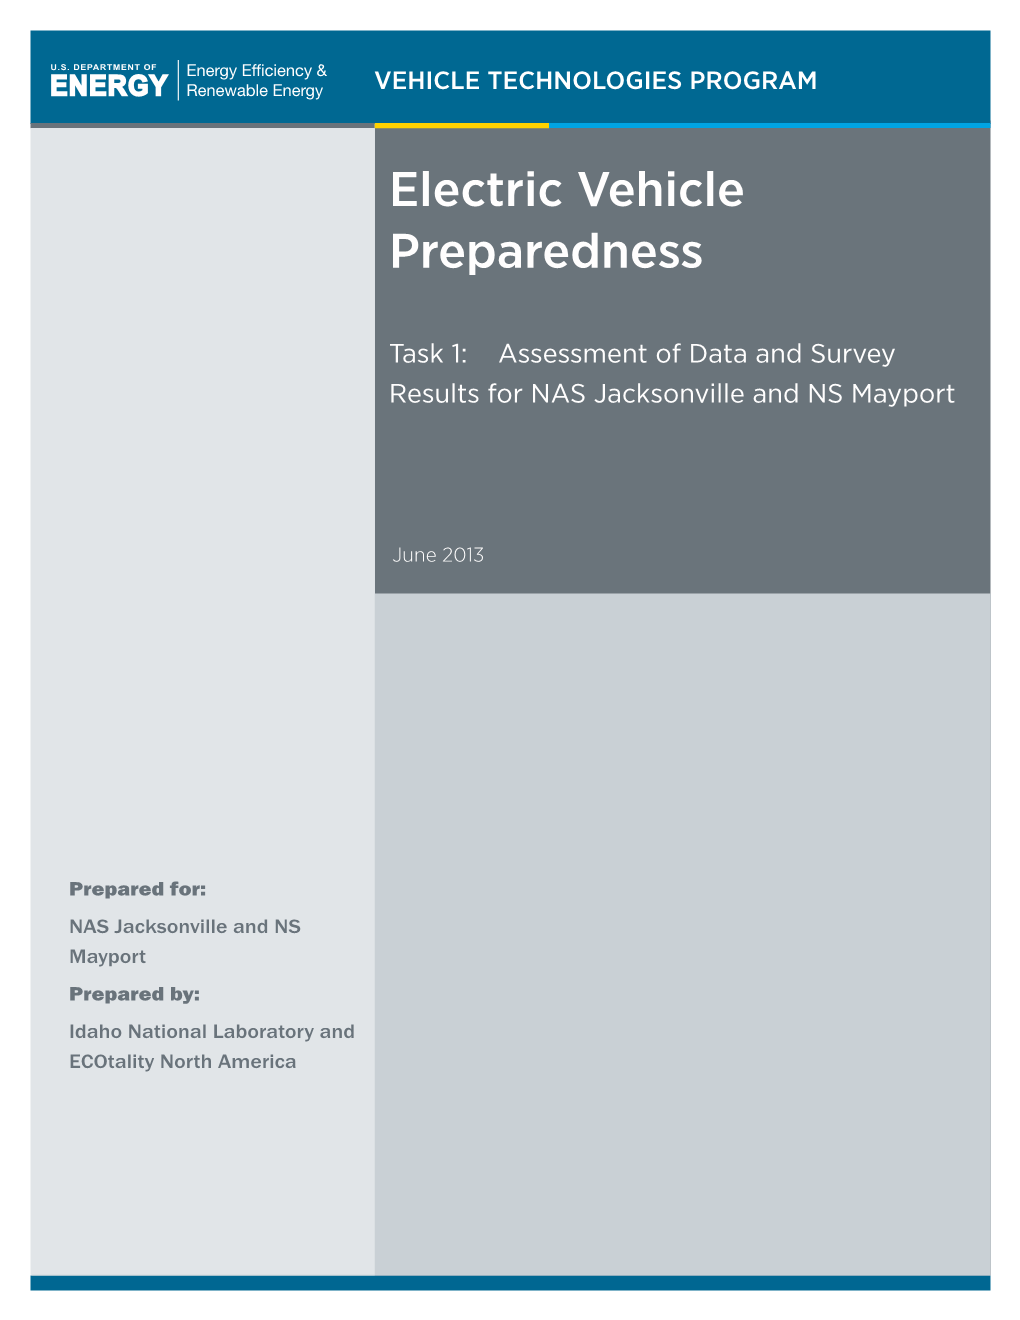 Electric Vehicle Preparedness